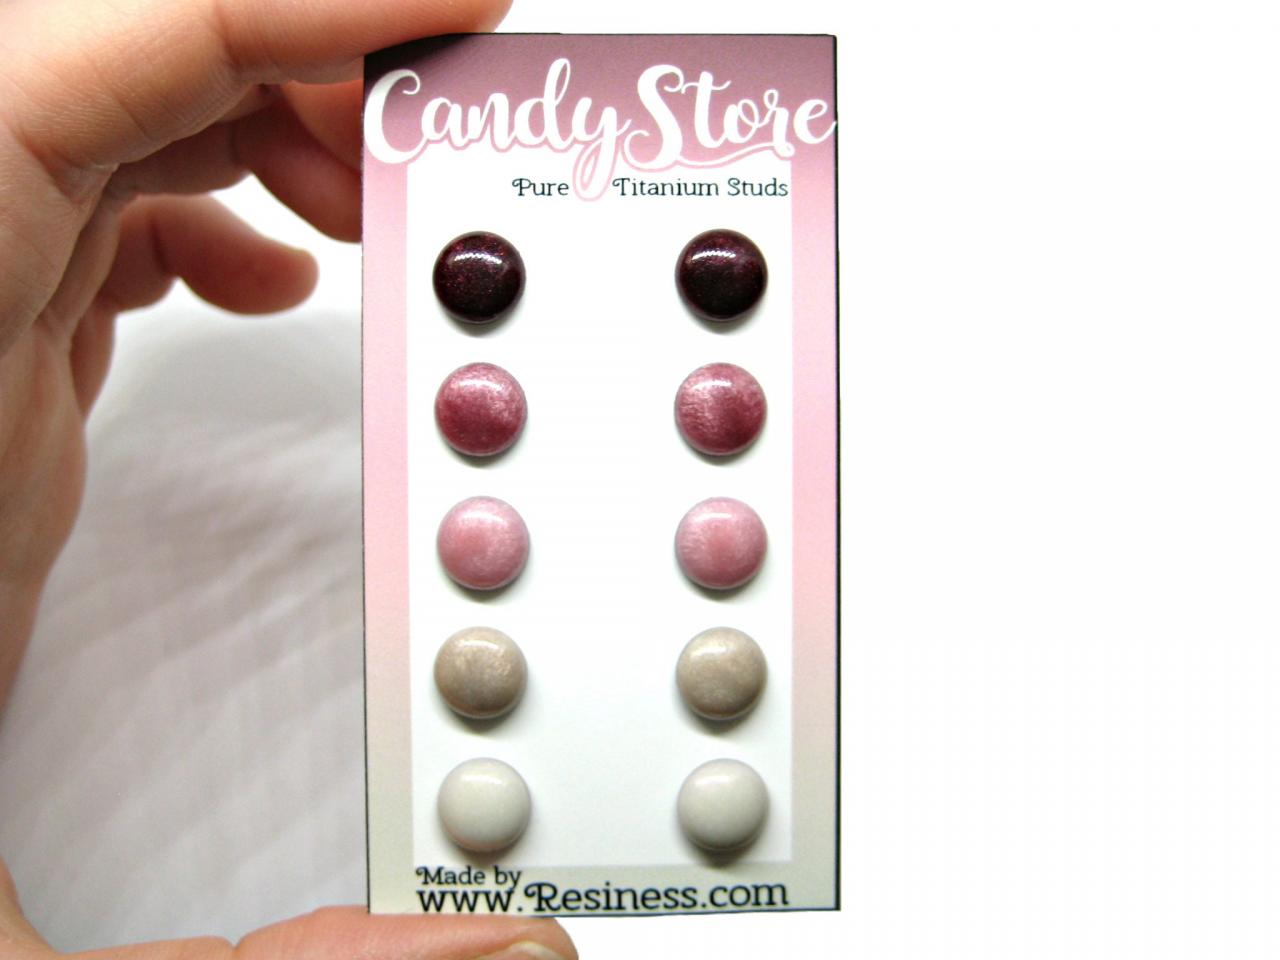 Candy Store Stud Earring Set, 5 Pair Set, Pink/white Stud Set, Hypoallergenic Posts, Titanium Earrings, Tiny Stud Earrings, Cute Gift Idea